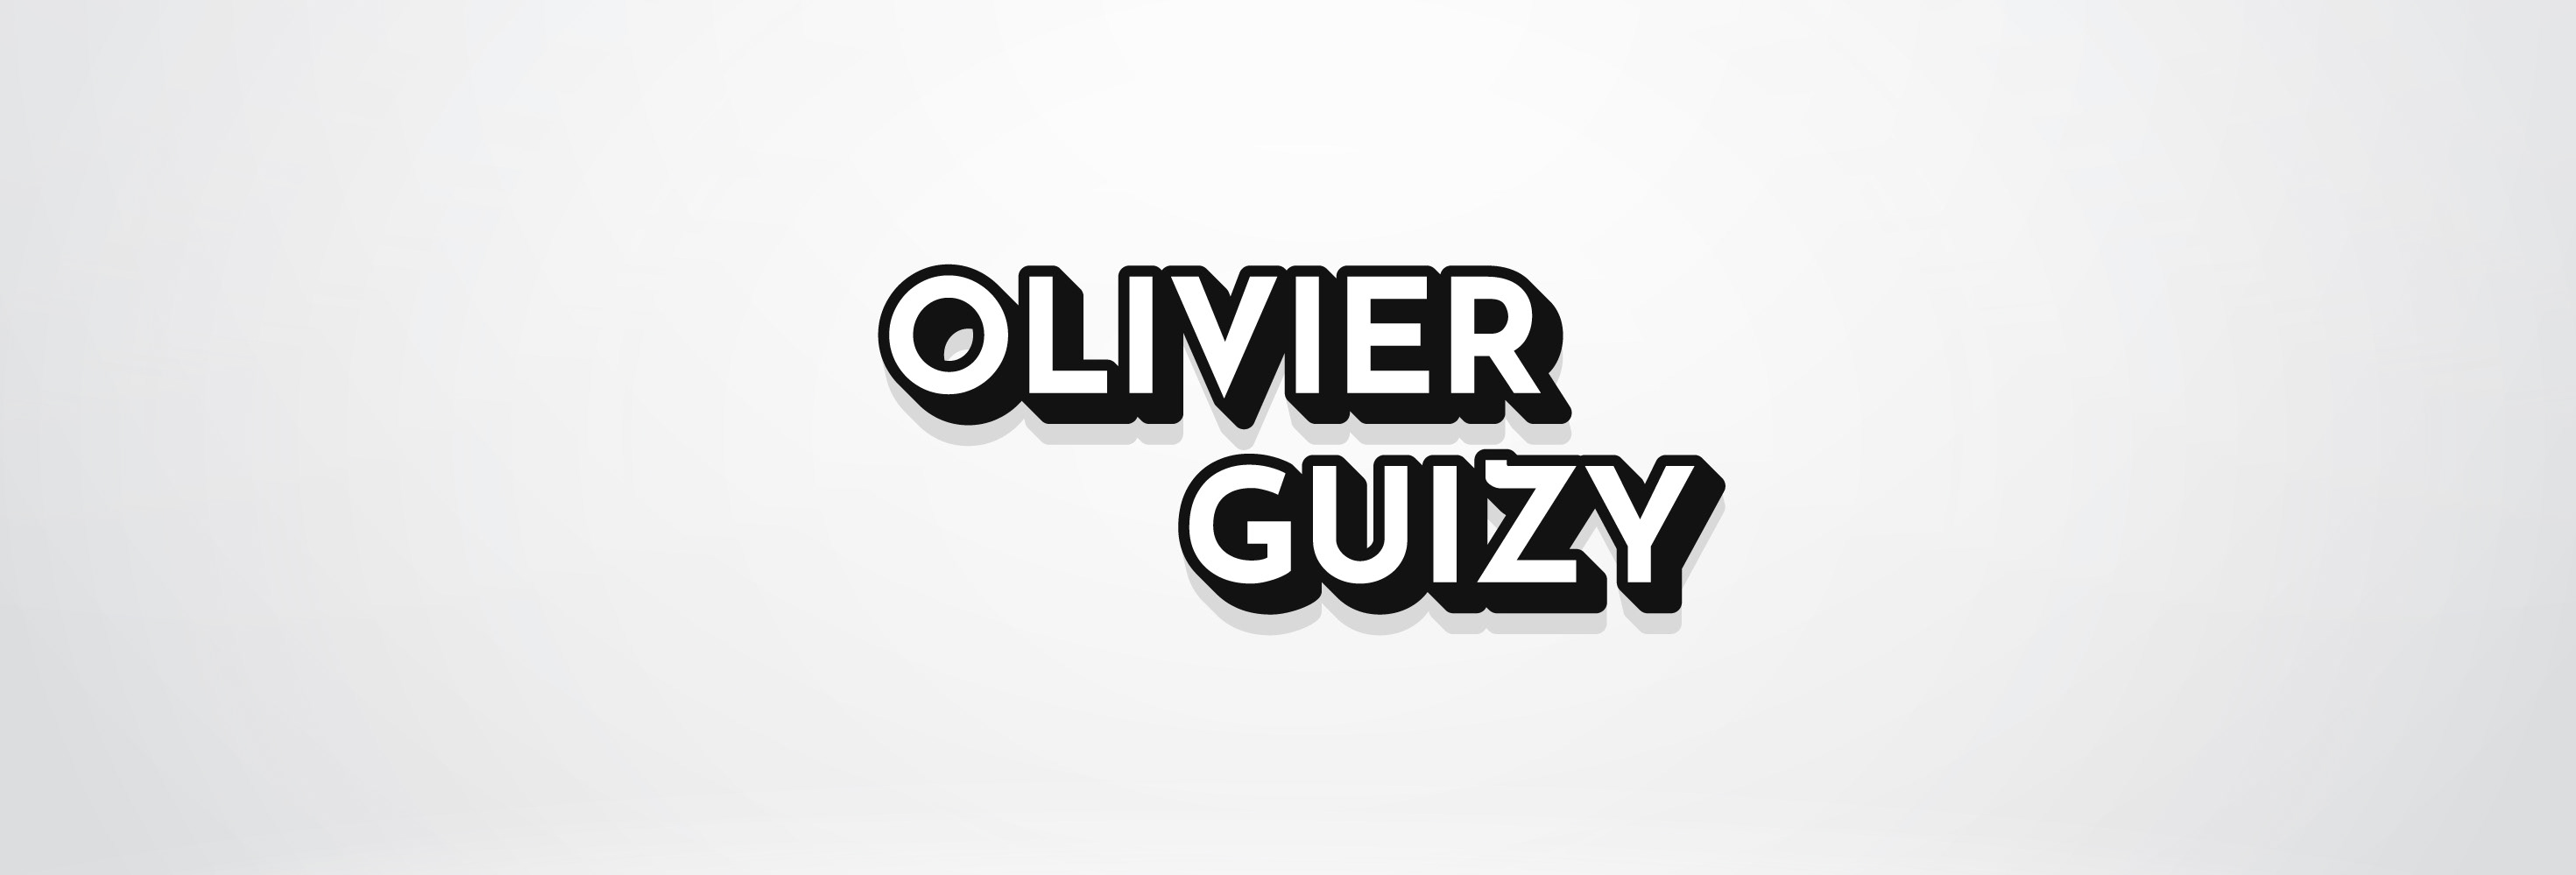 Olivier Guizy